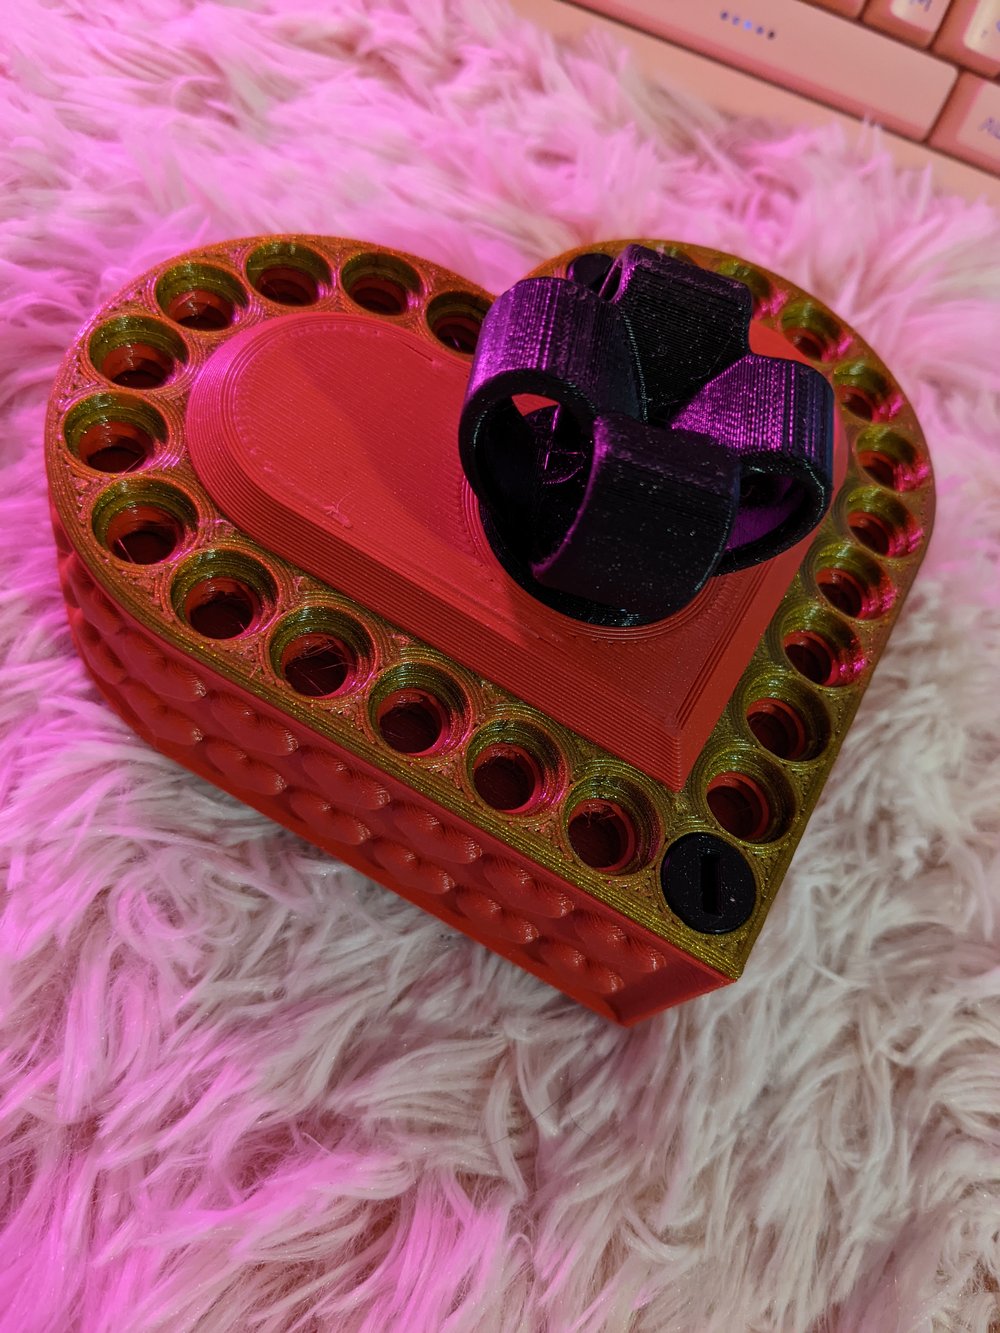 Image of heart shape puzzle box